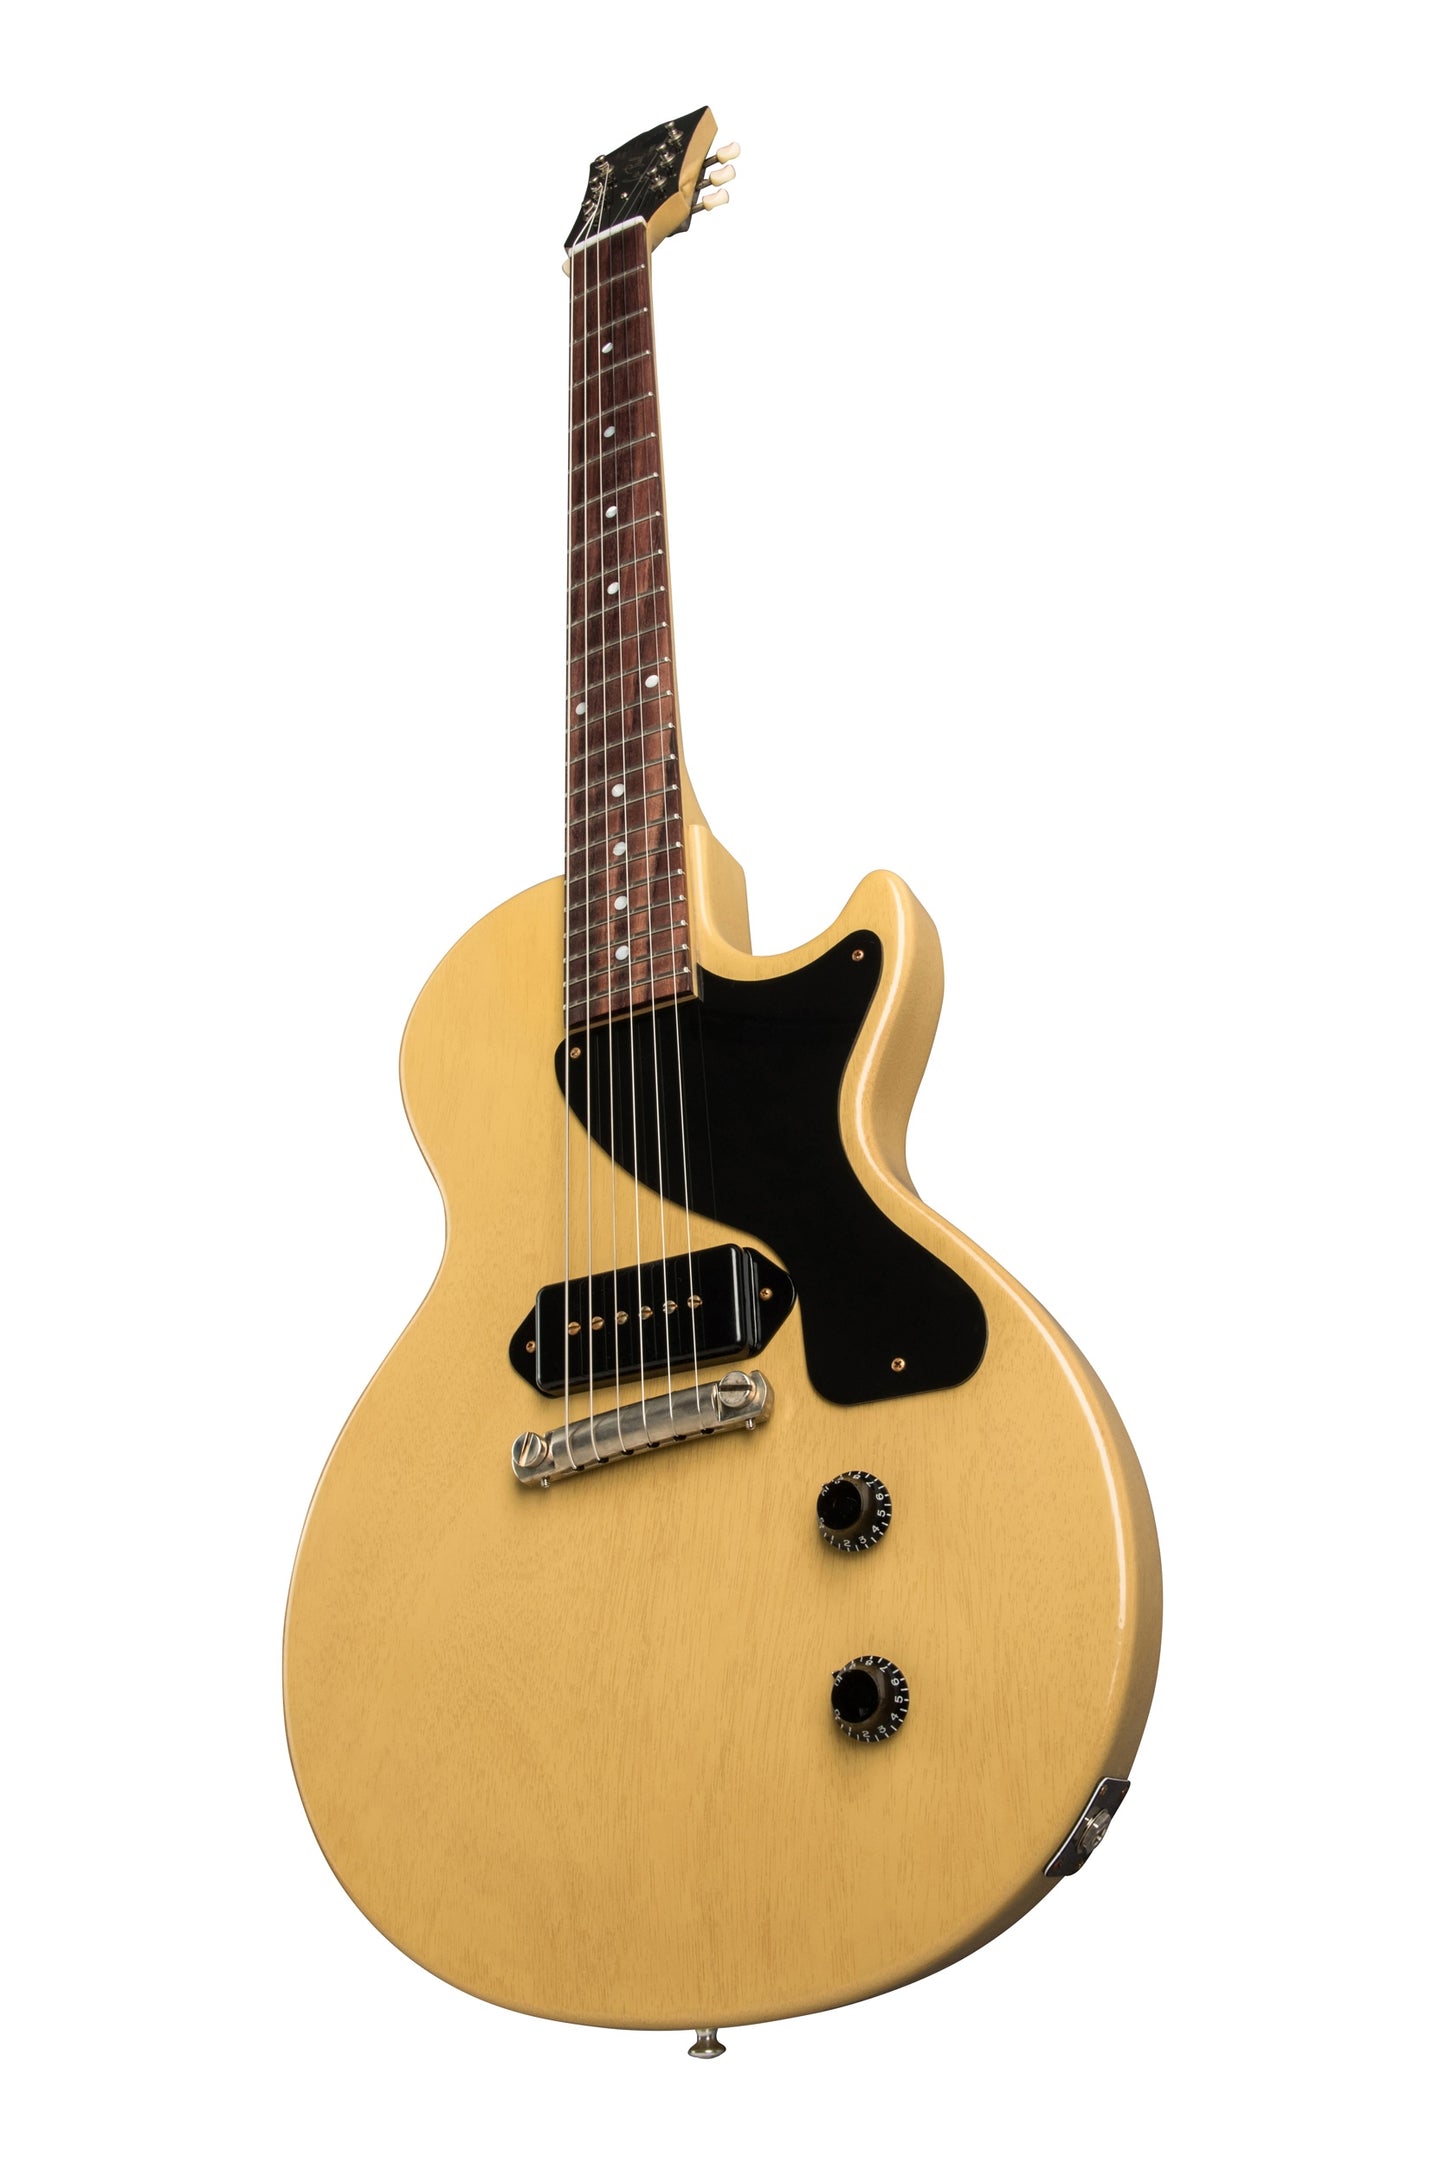 Gibson 1957 Les Paul Junior Reissue Electric Guitar - TV Yellow